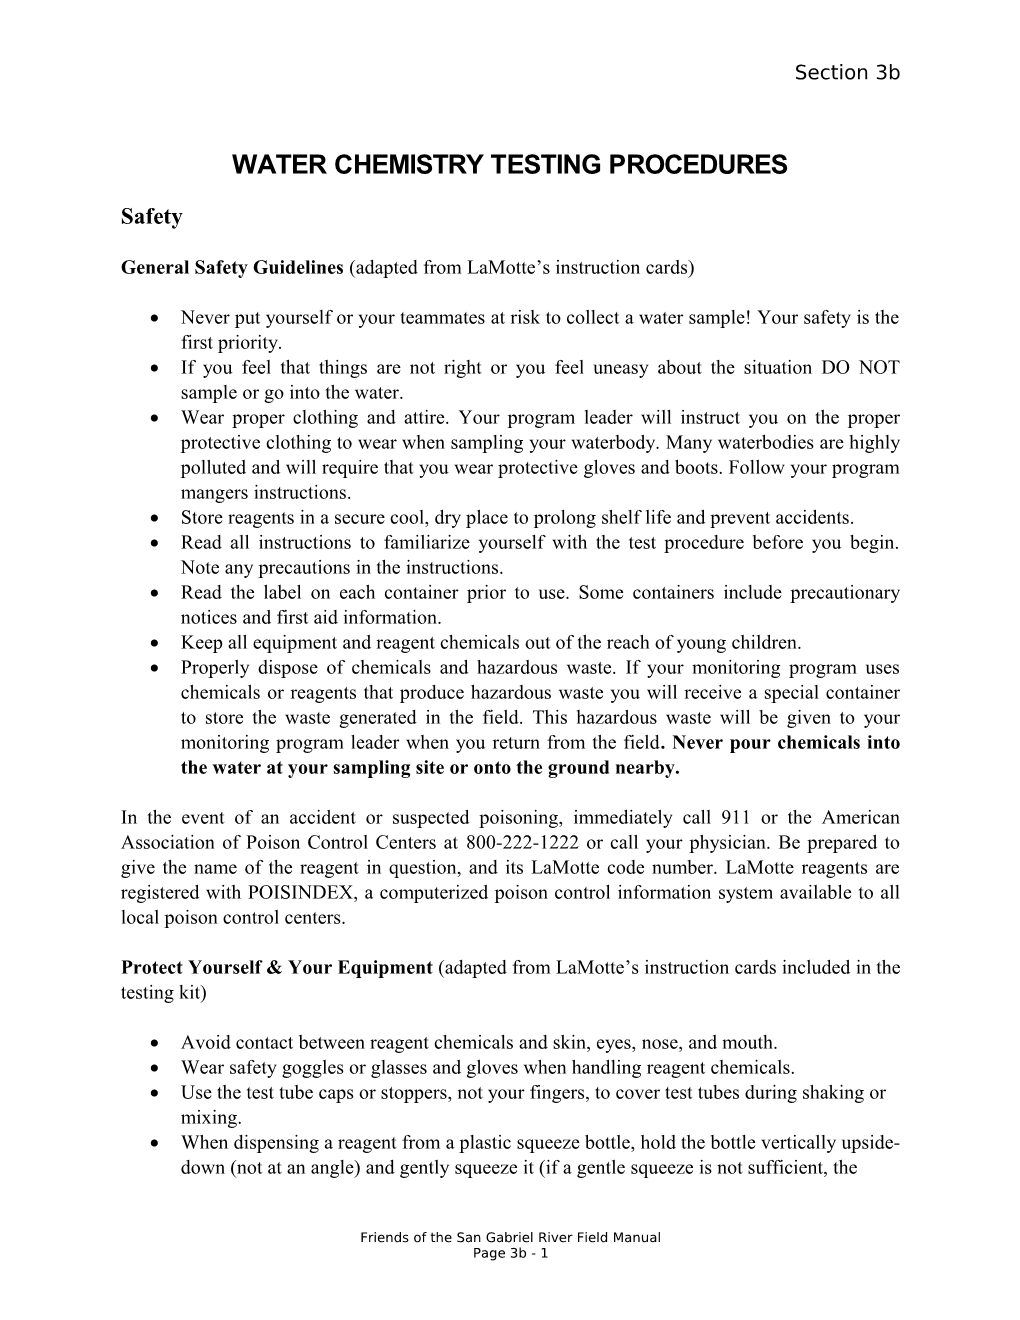 Water Chemistry Testing Procedures